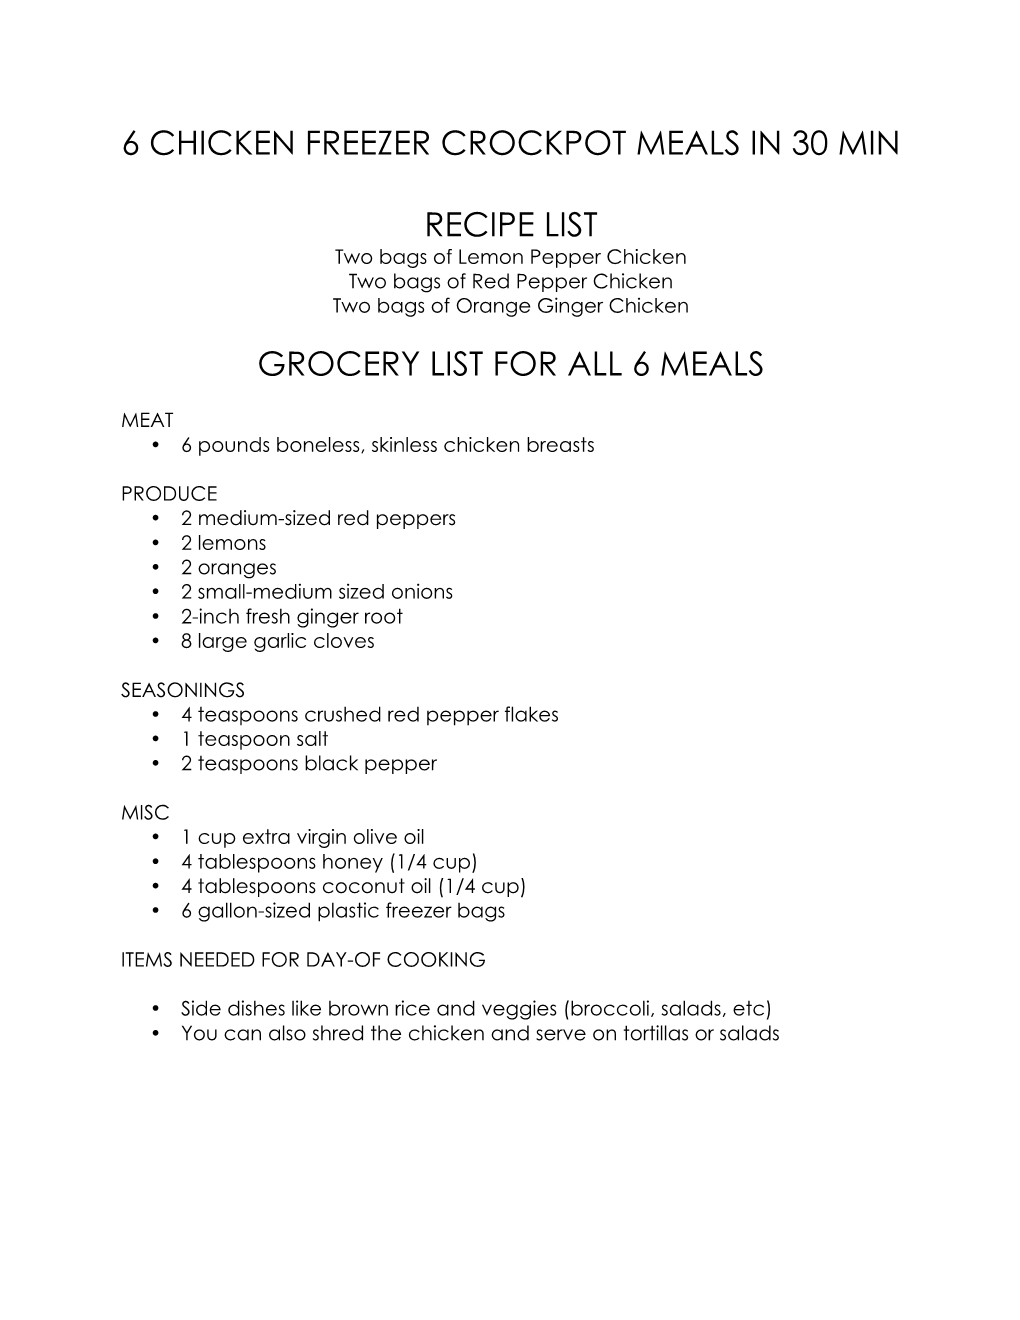 6 Chicken Freezer Crockpot Meals in 30 Min Recipe List